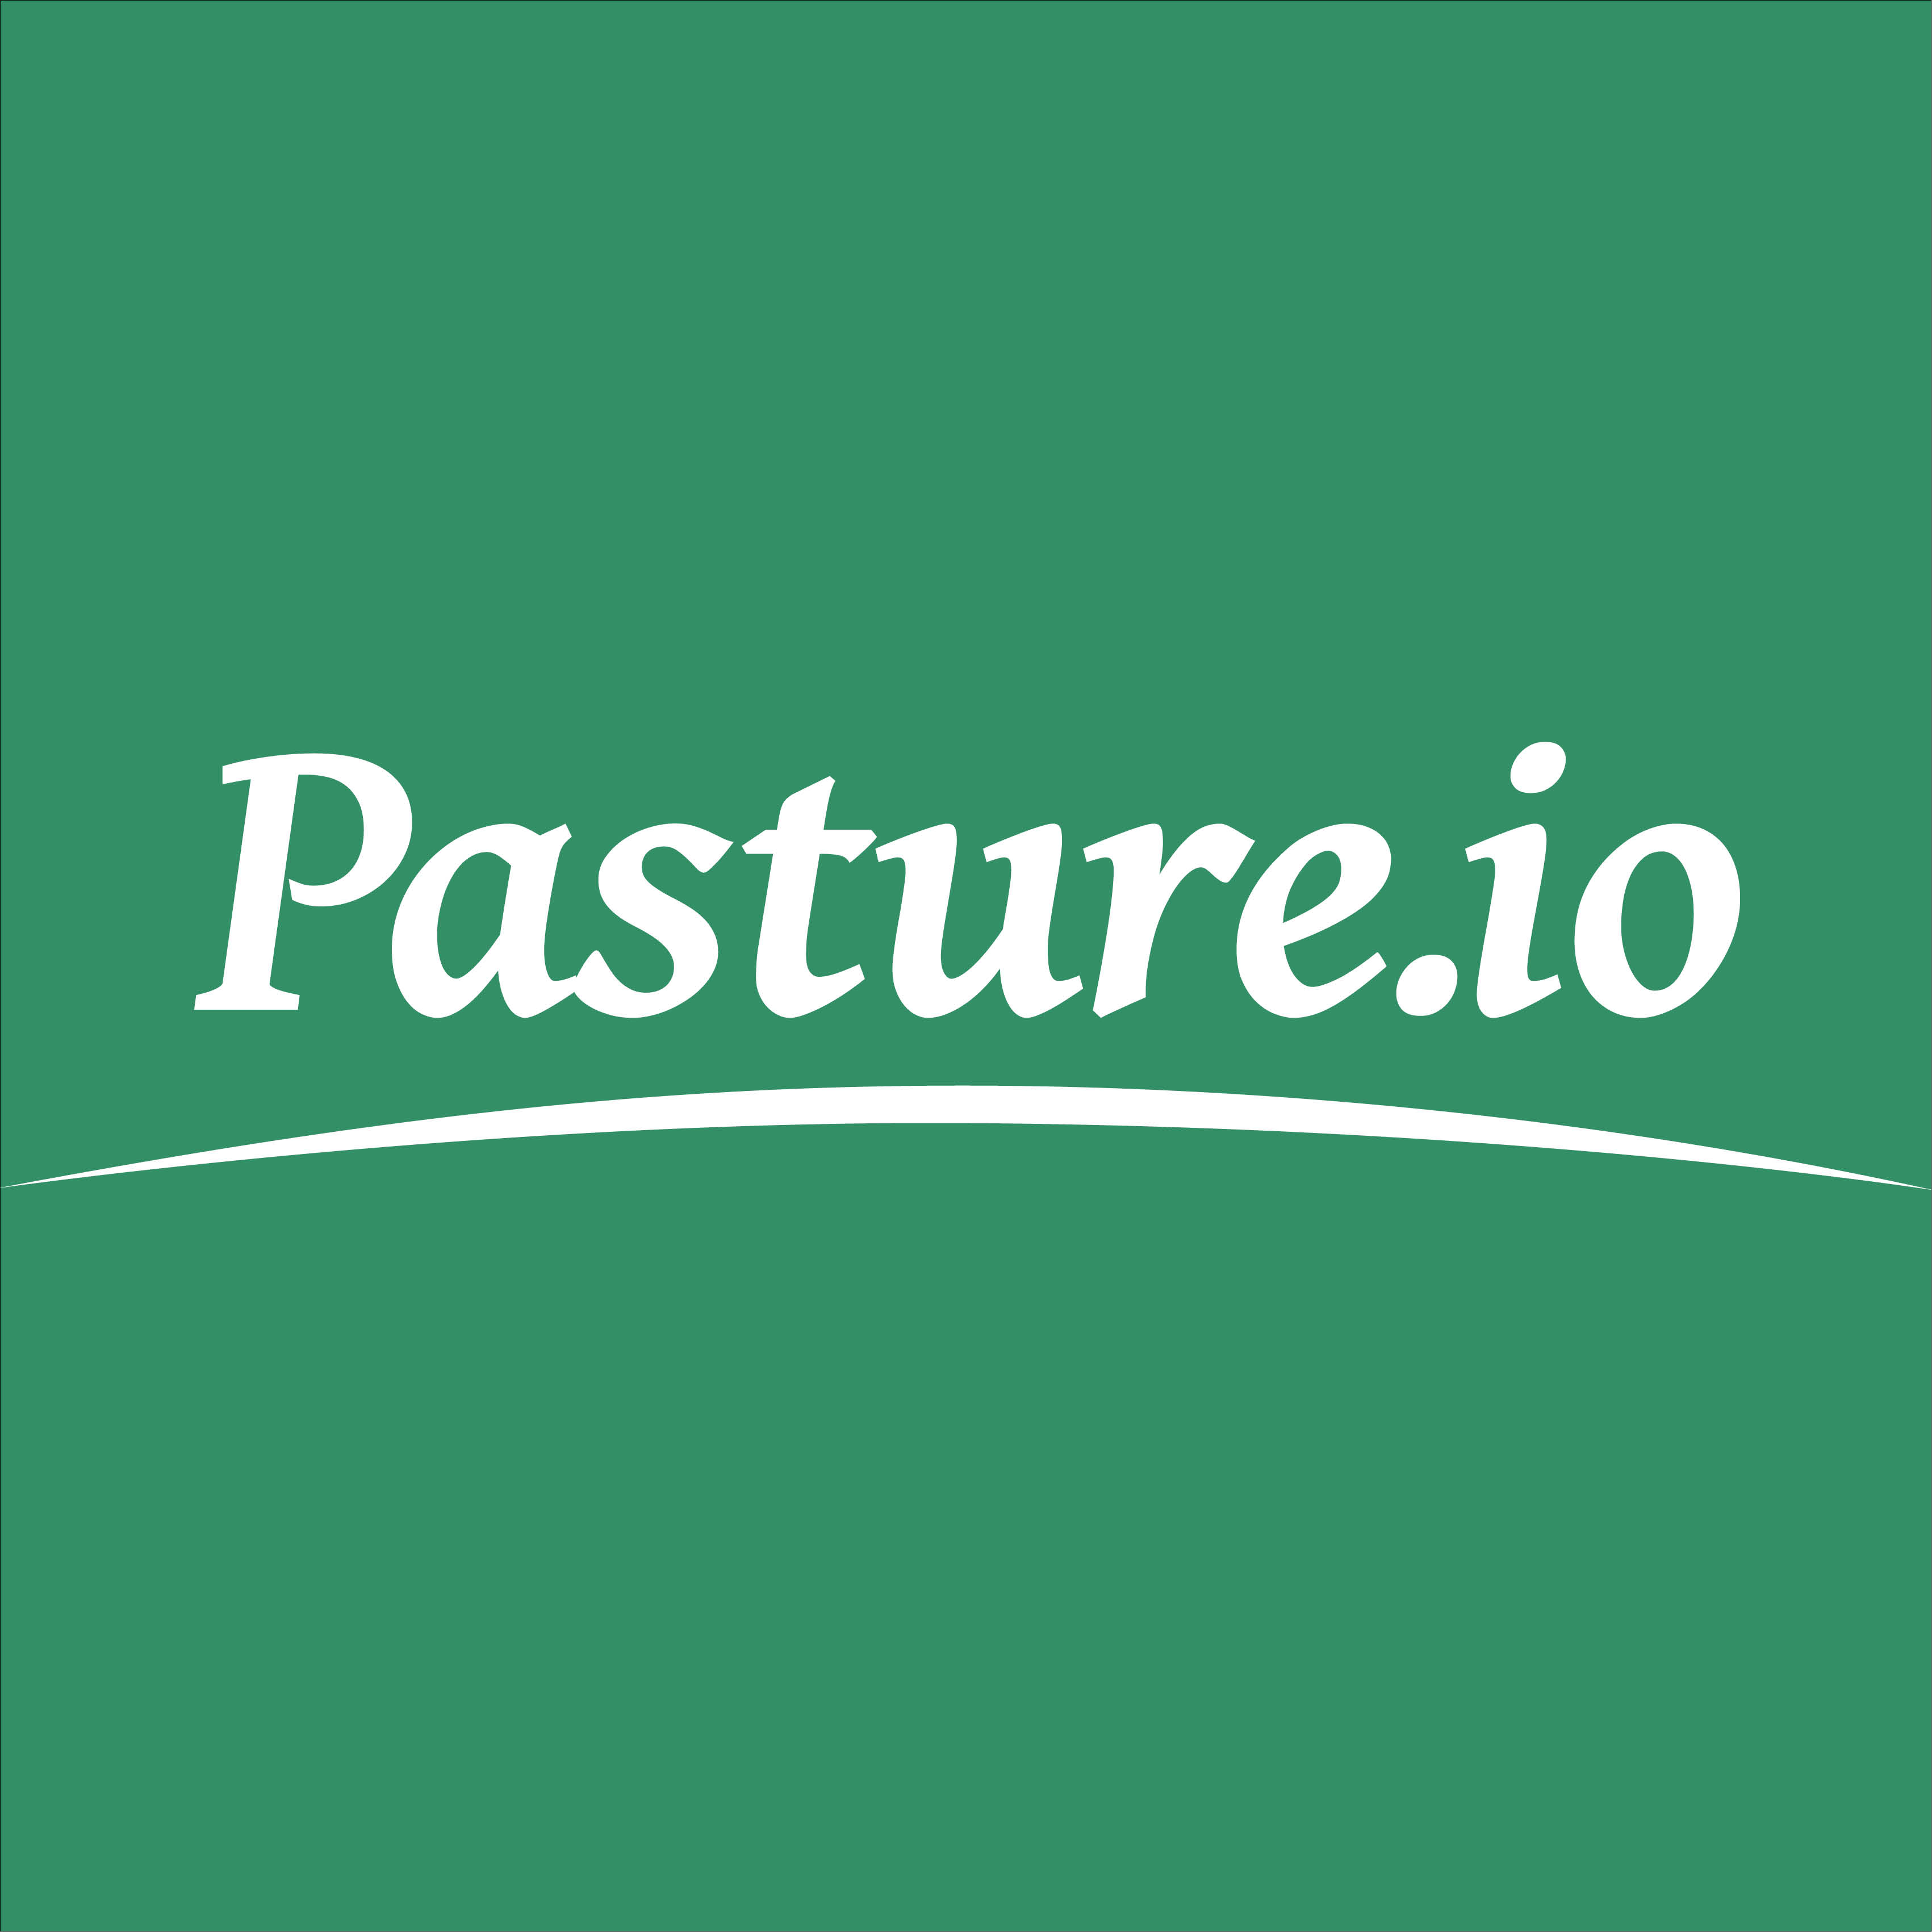 pasture.io_logo.png